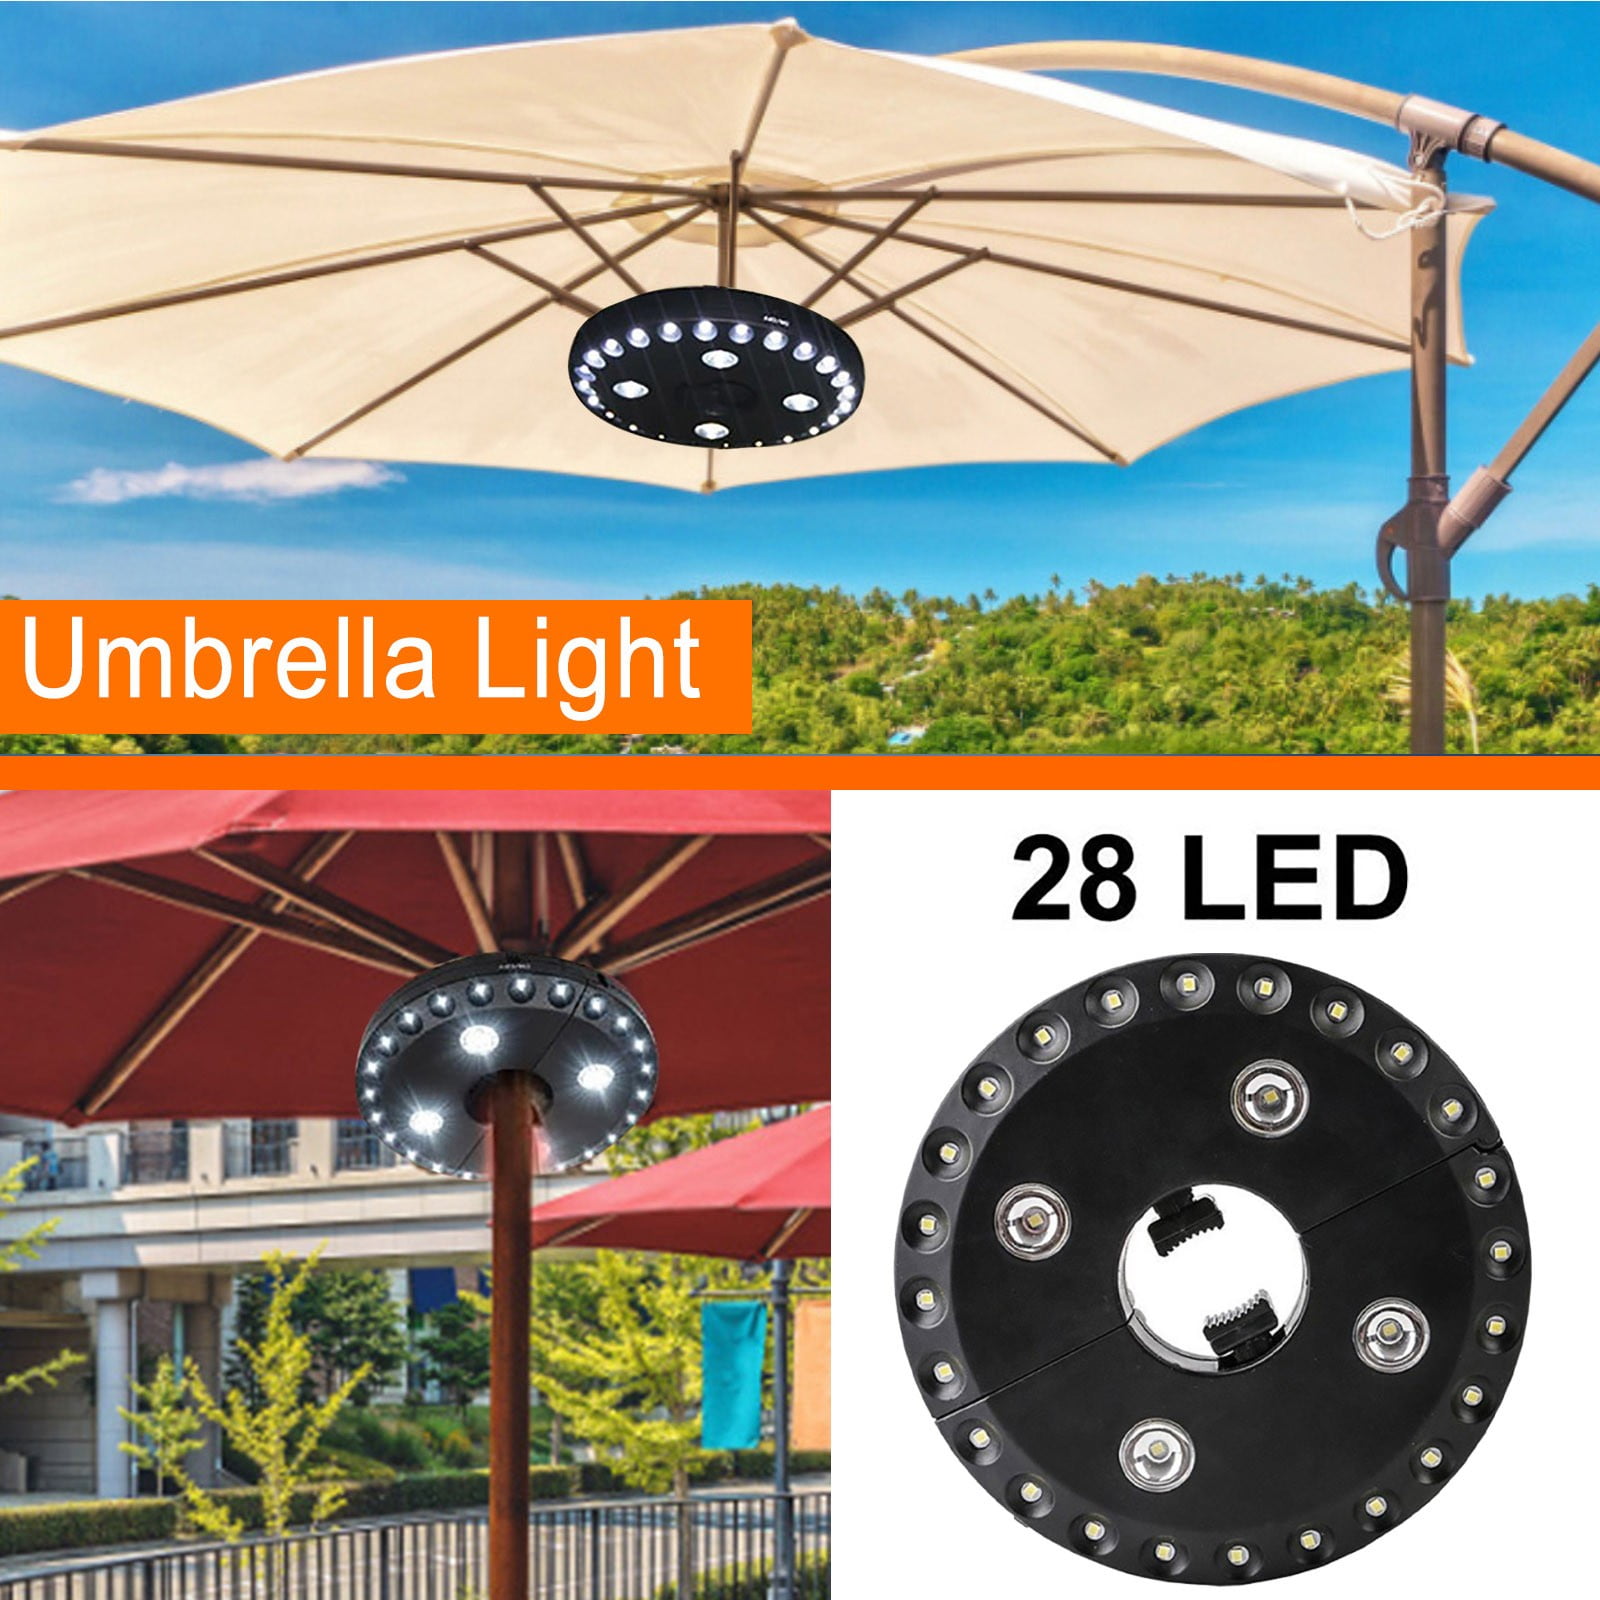 Led Dry Battery Disc Umbrella Light, Patio Umbrella Fan And Light